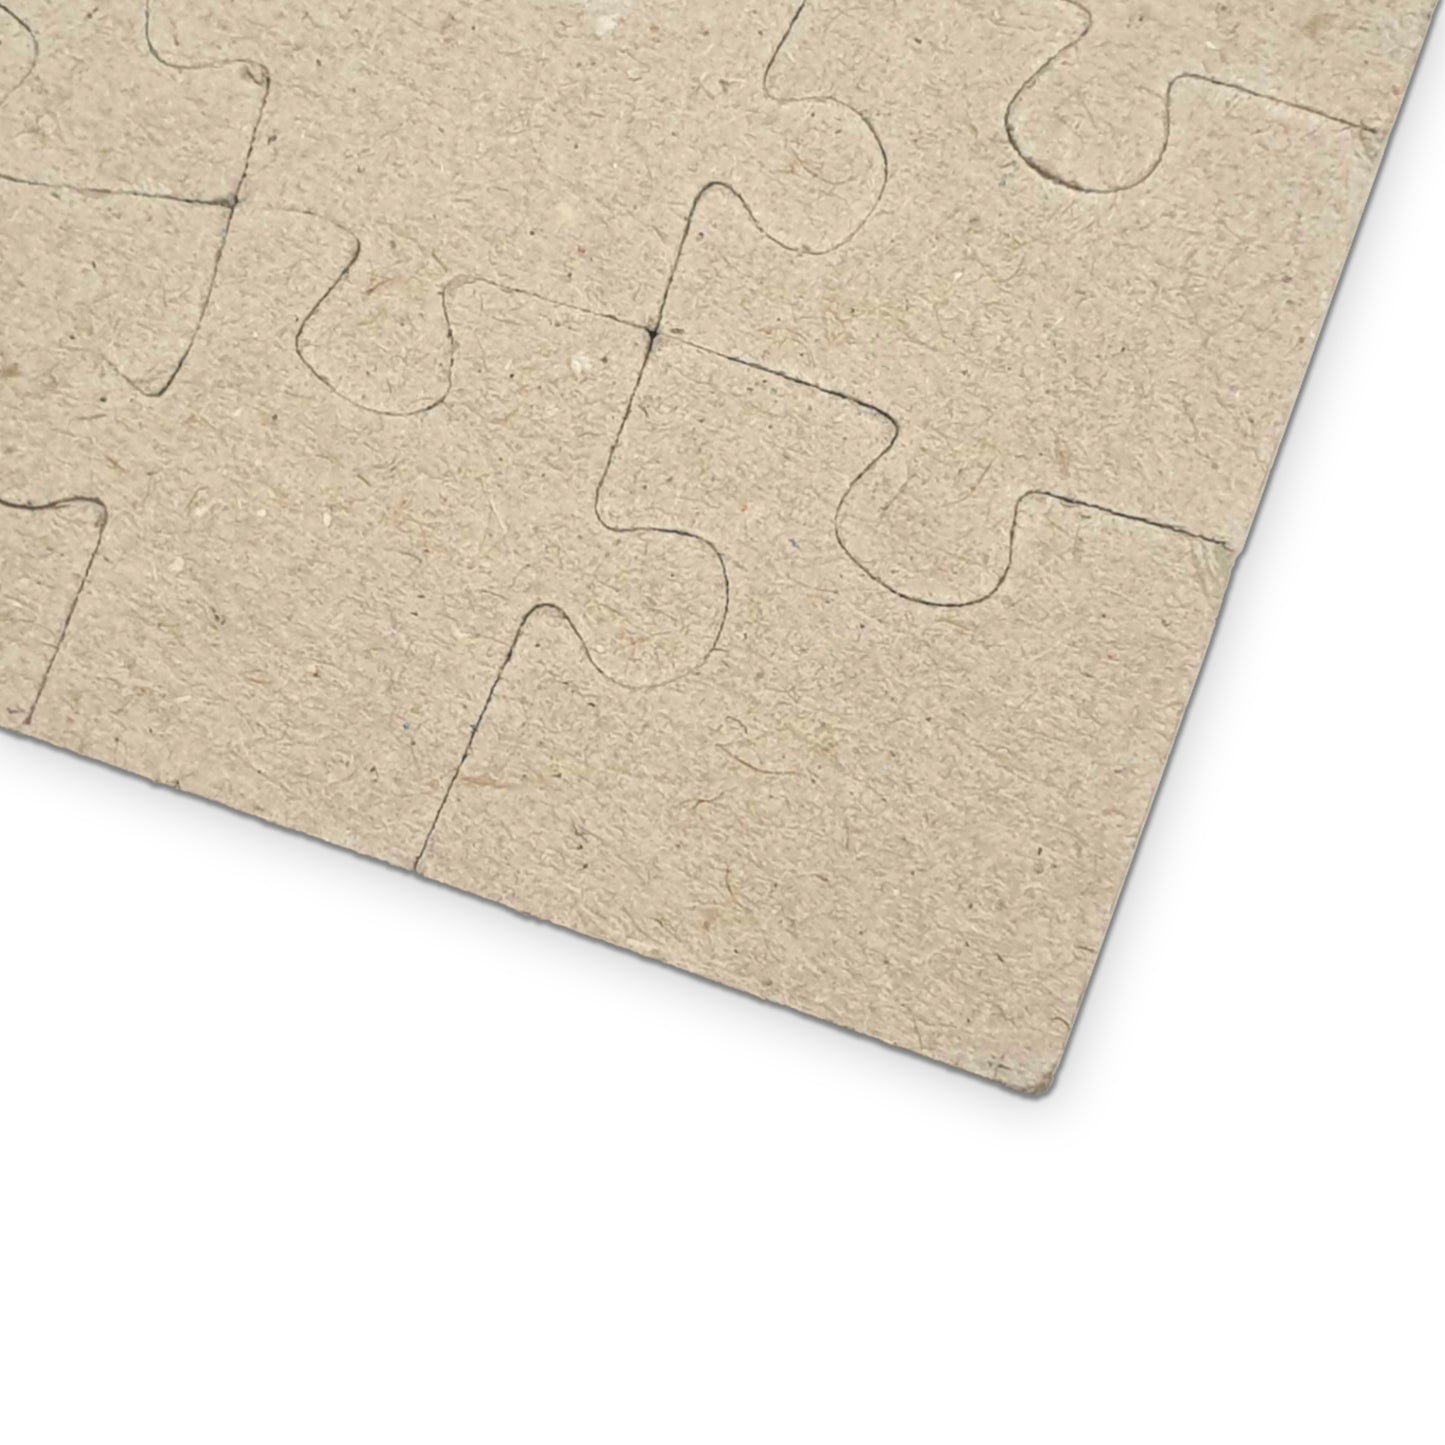 Thornfalcon - 1000 Piece Jigsaw Puzzle